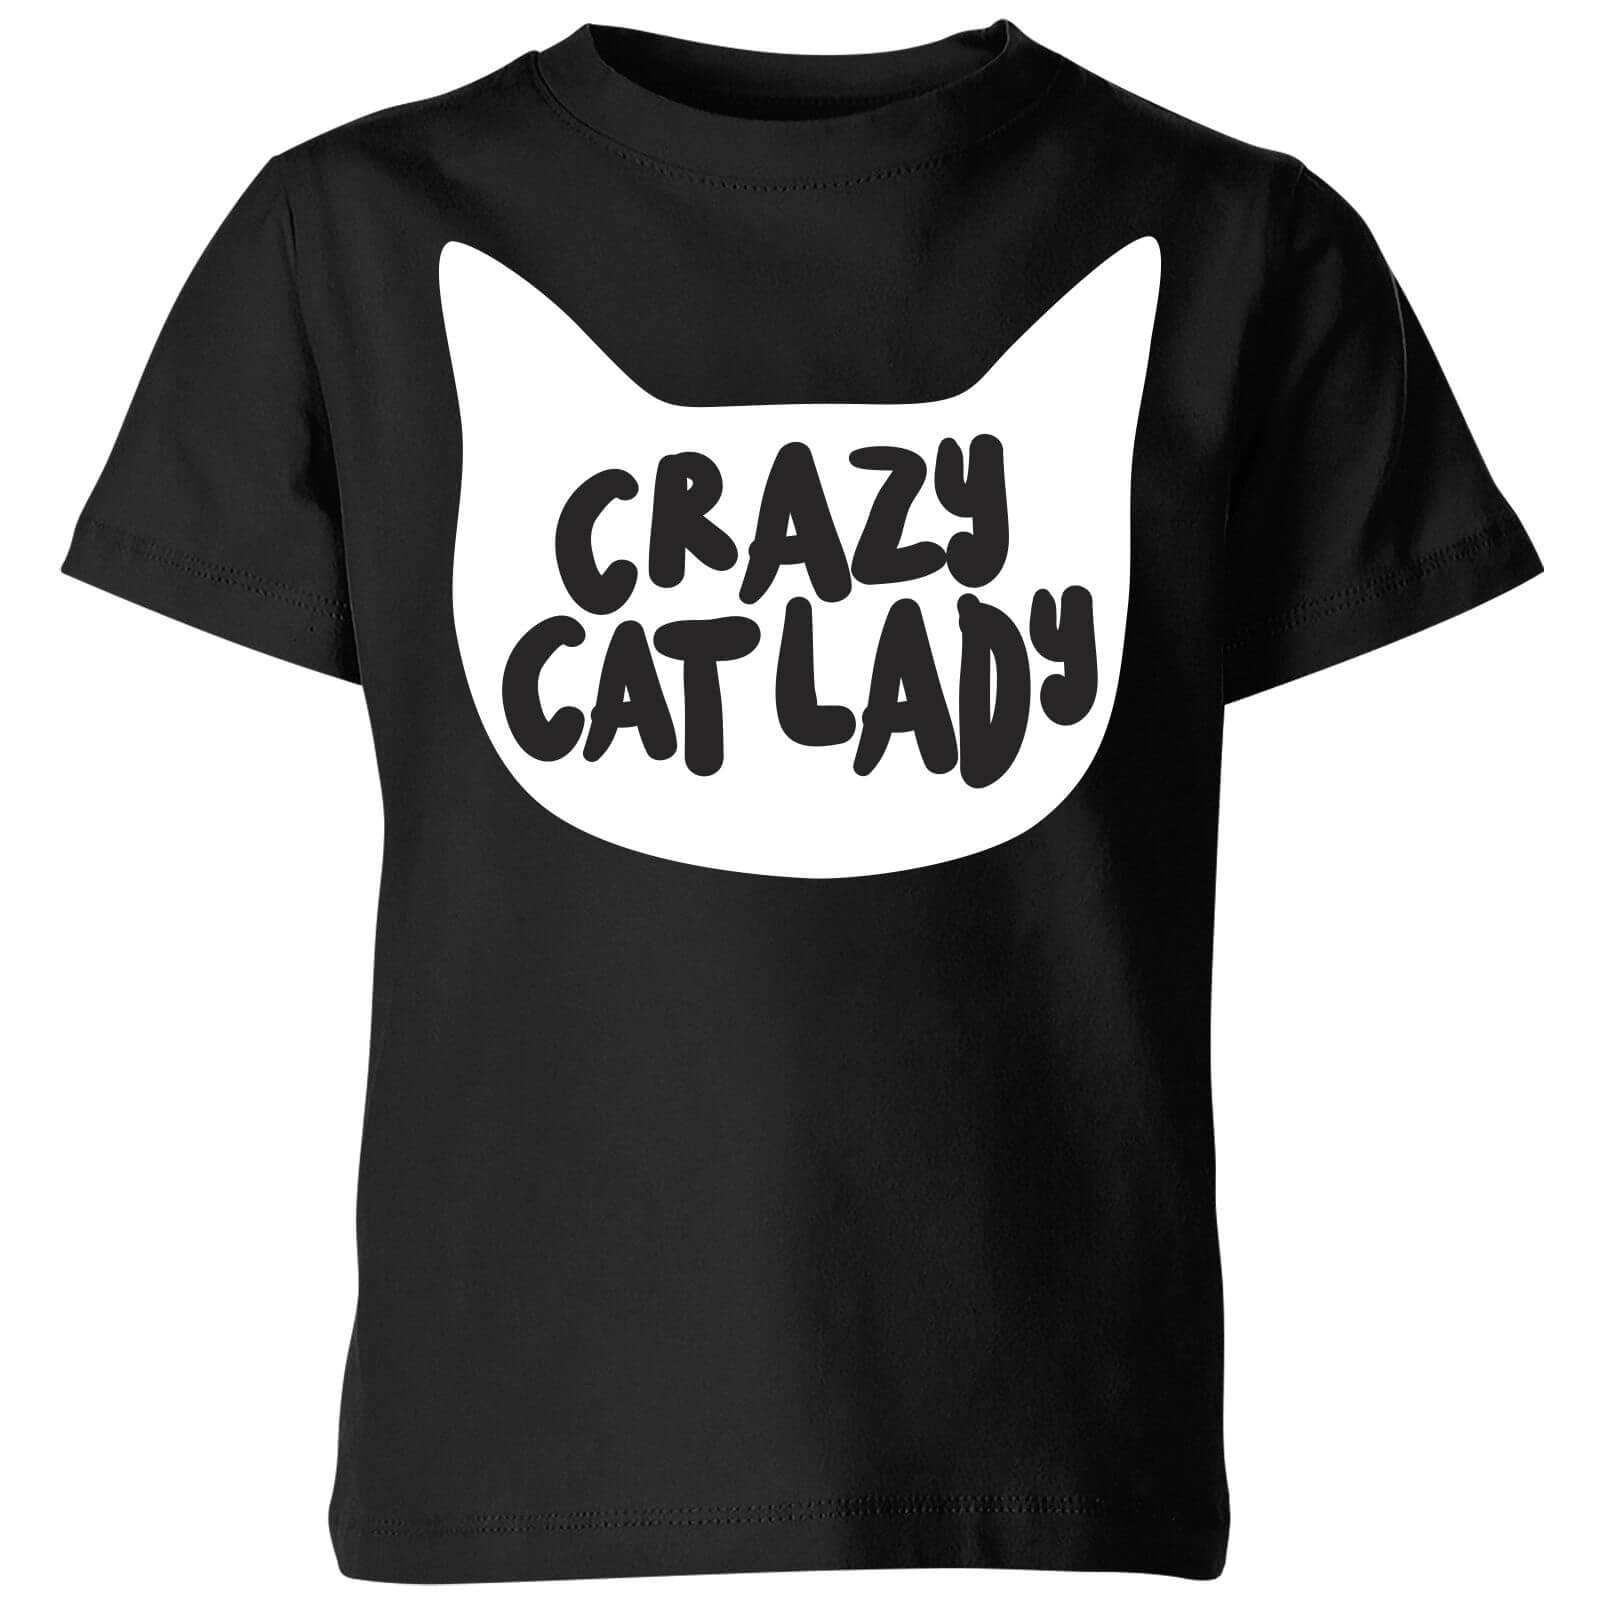 Crazy Cat Lady Kids' T-Shirt - Black - 3-4 Years - Black